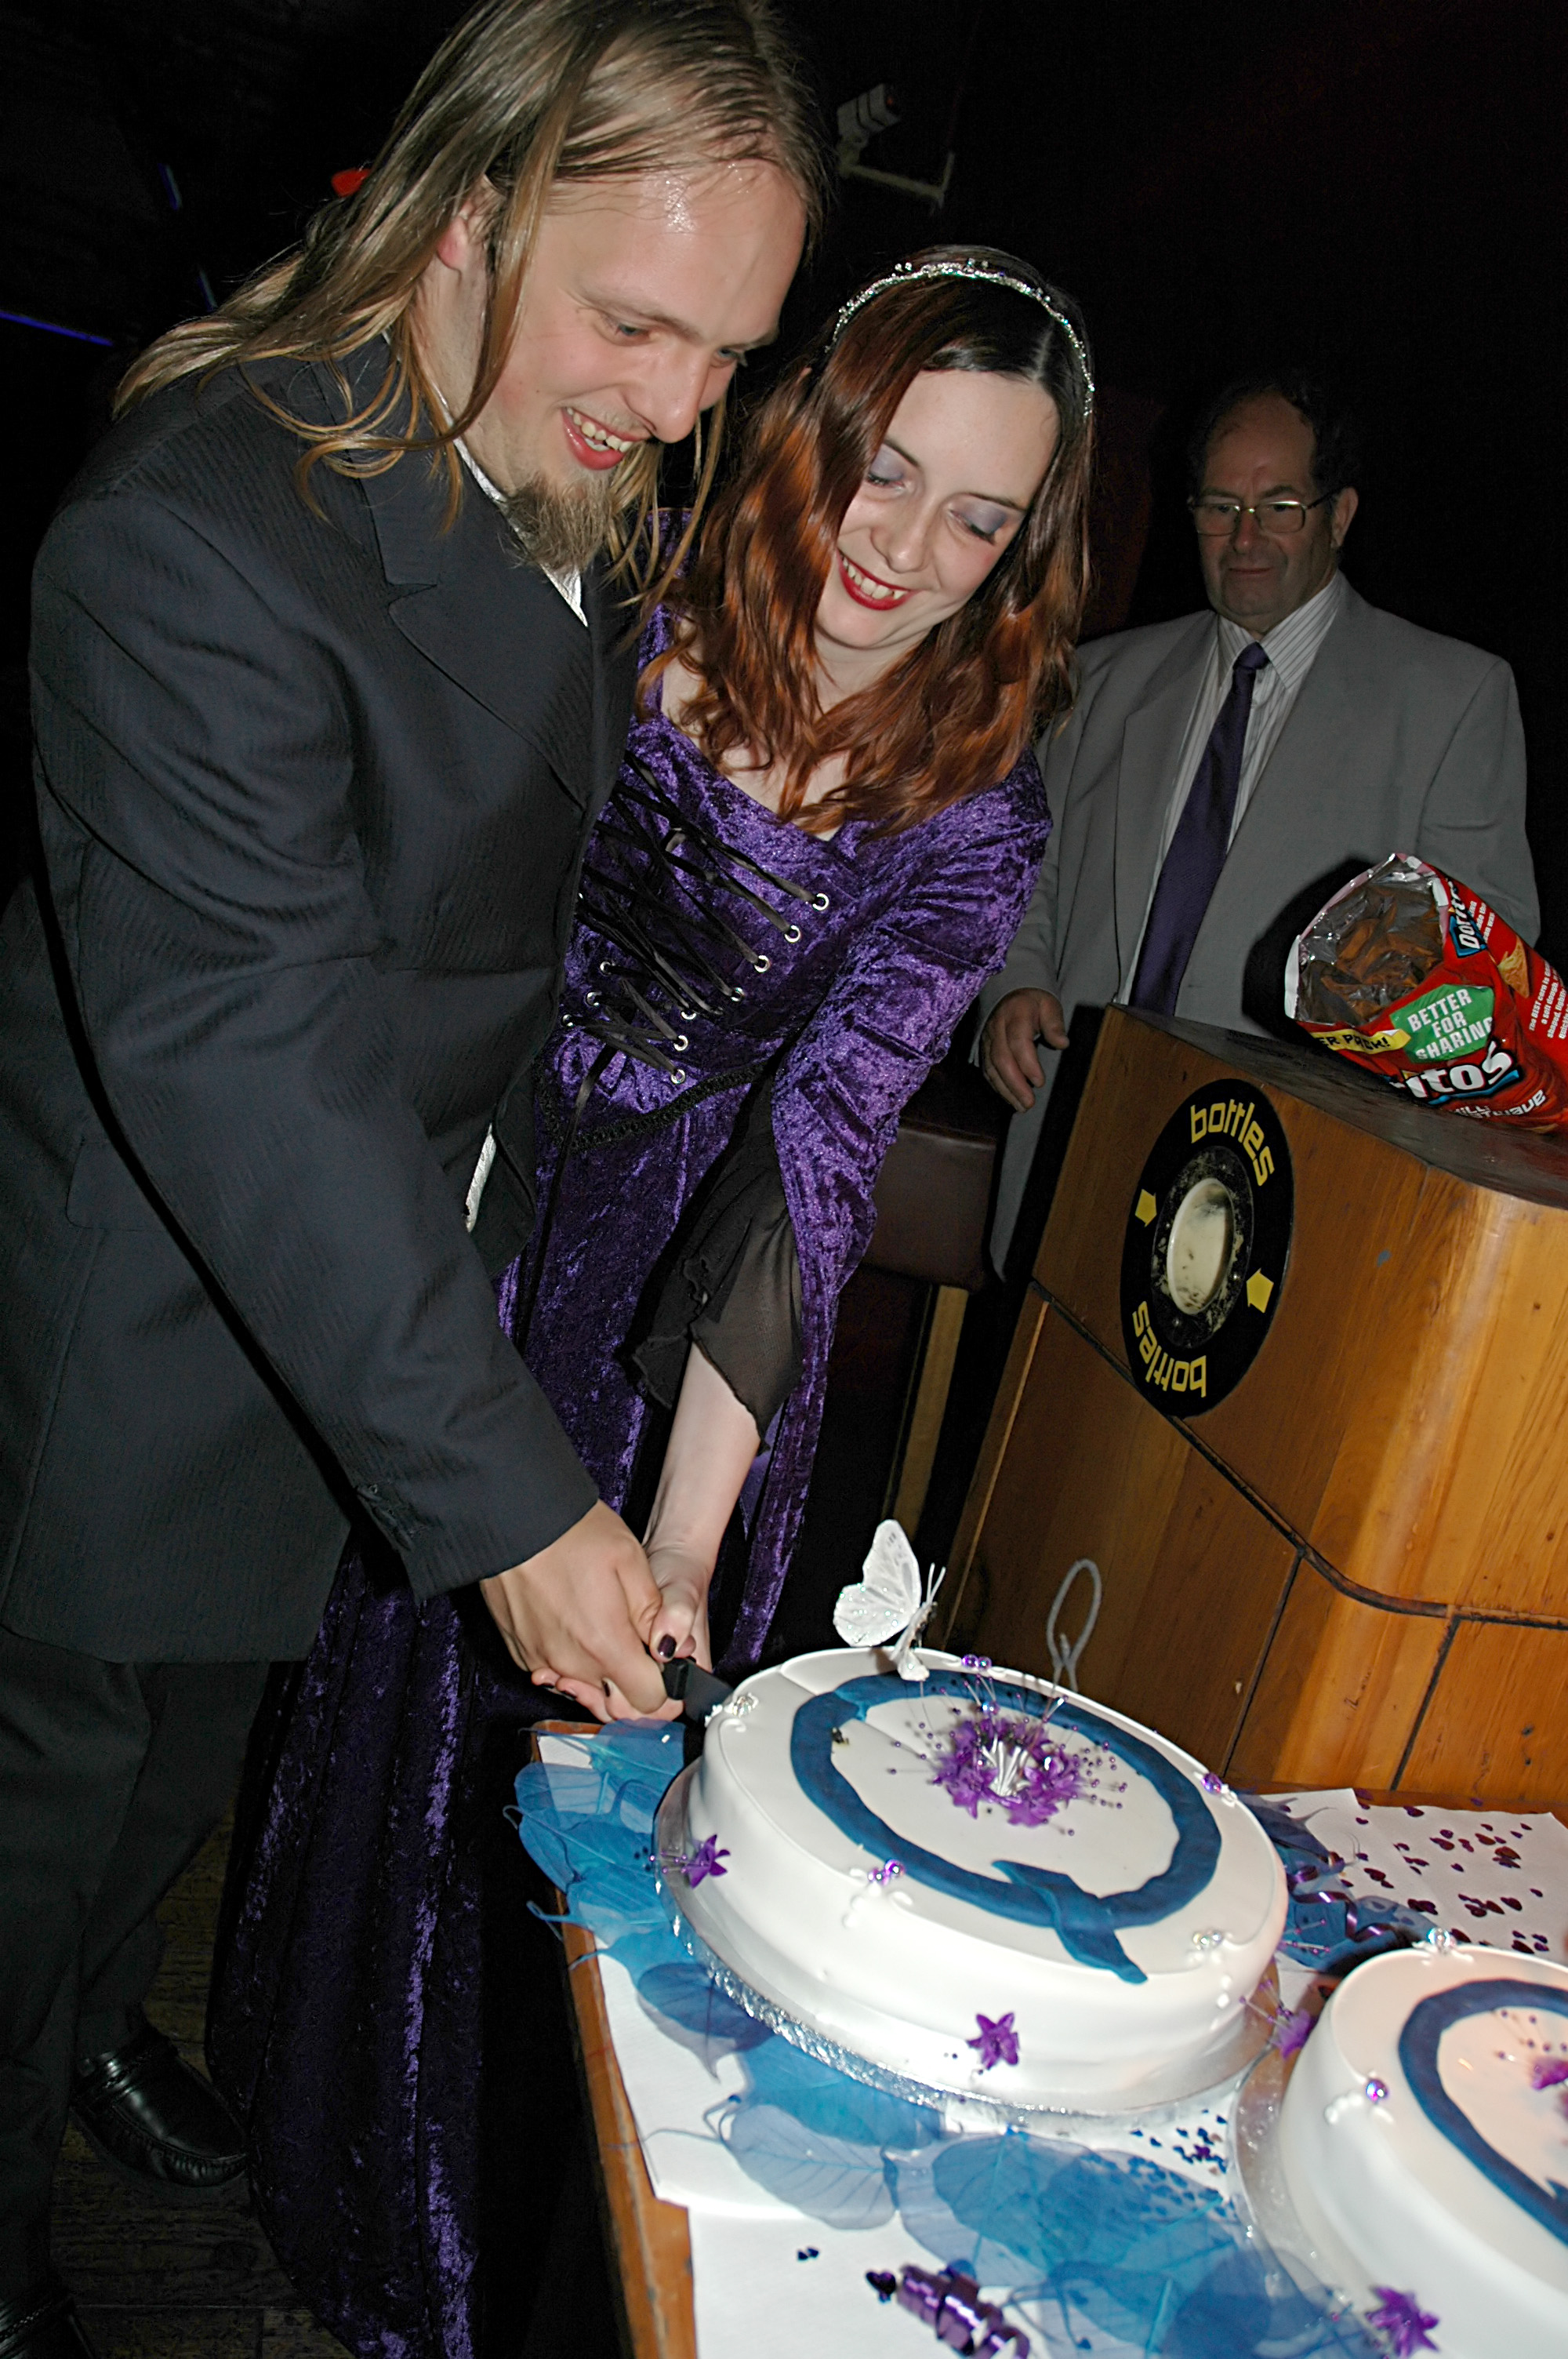 Dan & Claire cut the cake